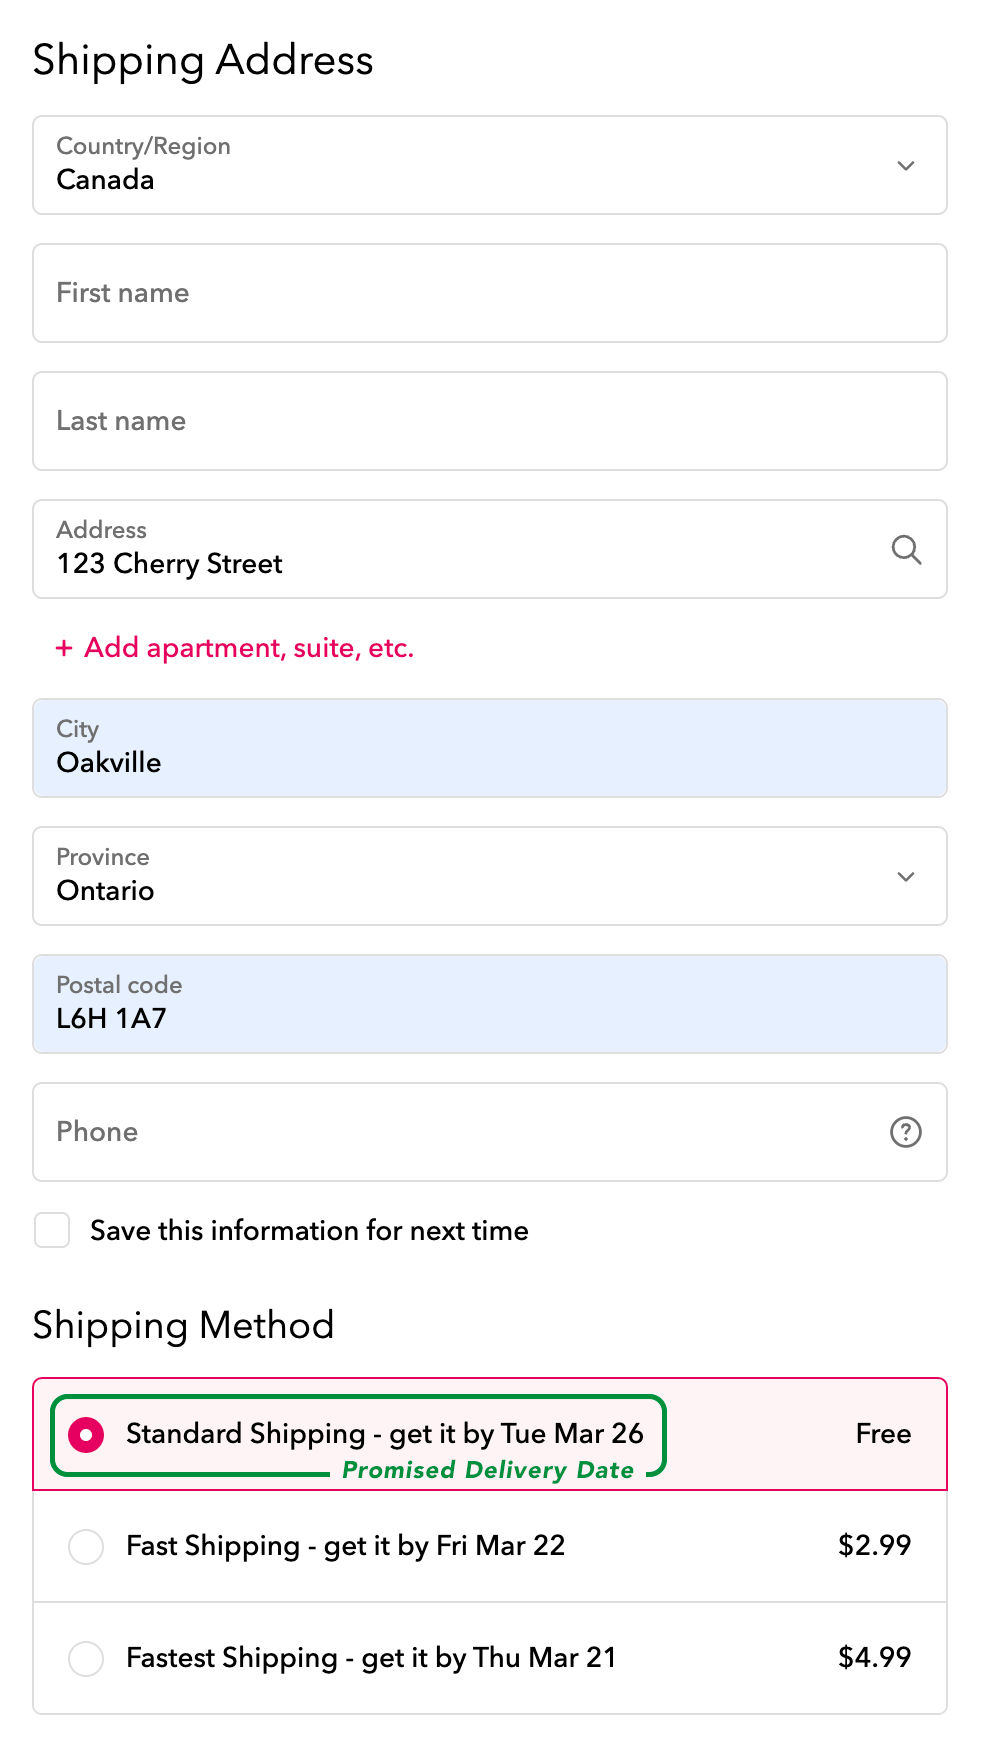 Shipping Screenshot - Mobile - PinkCherry